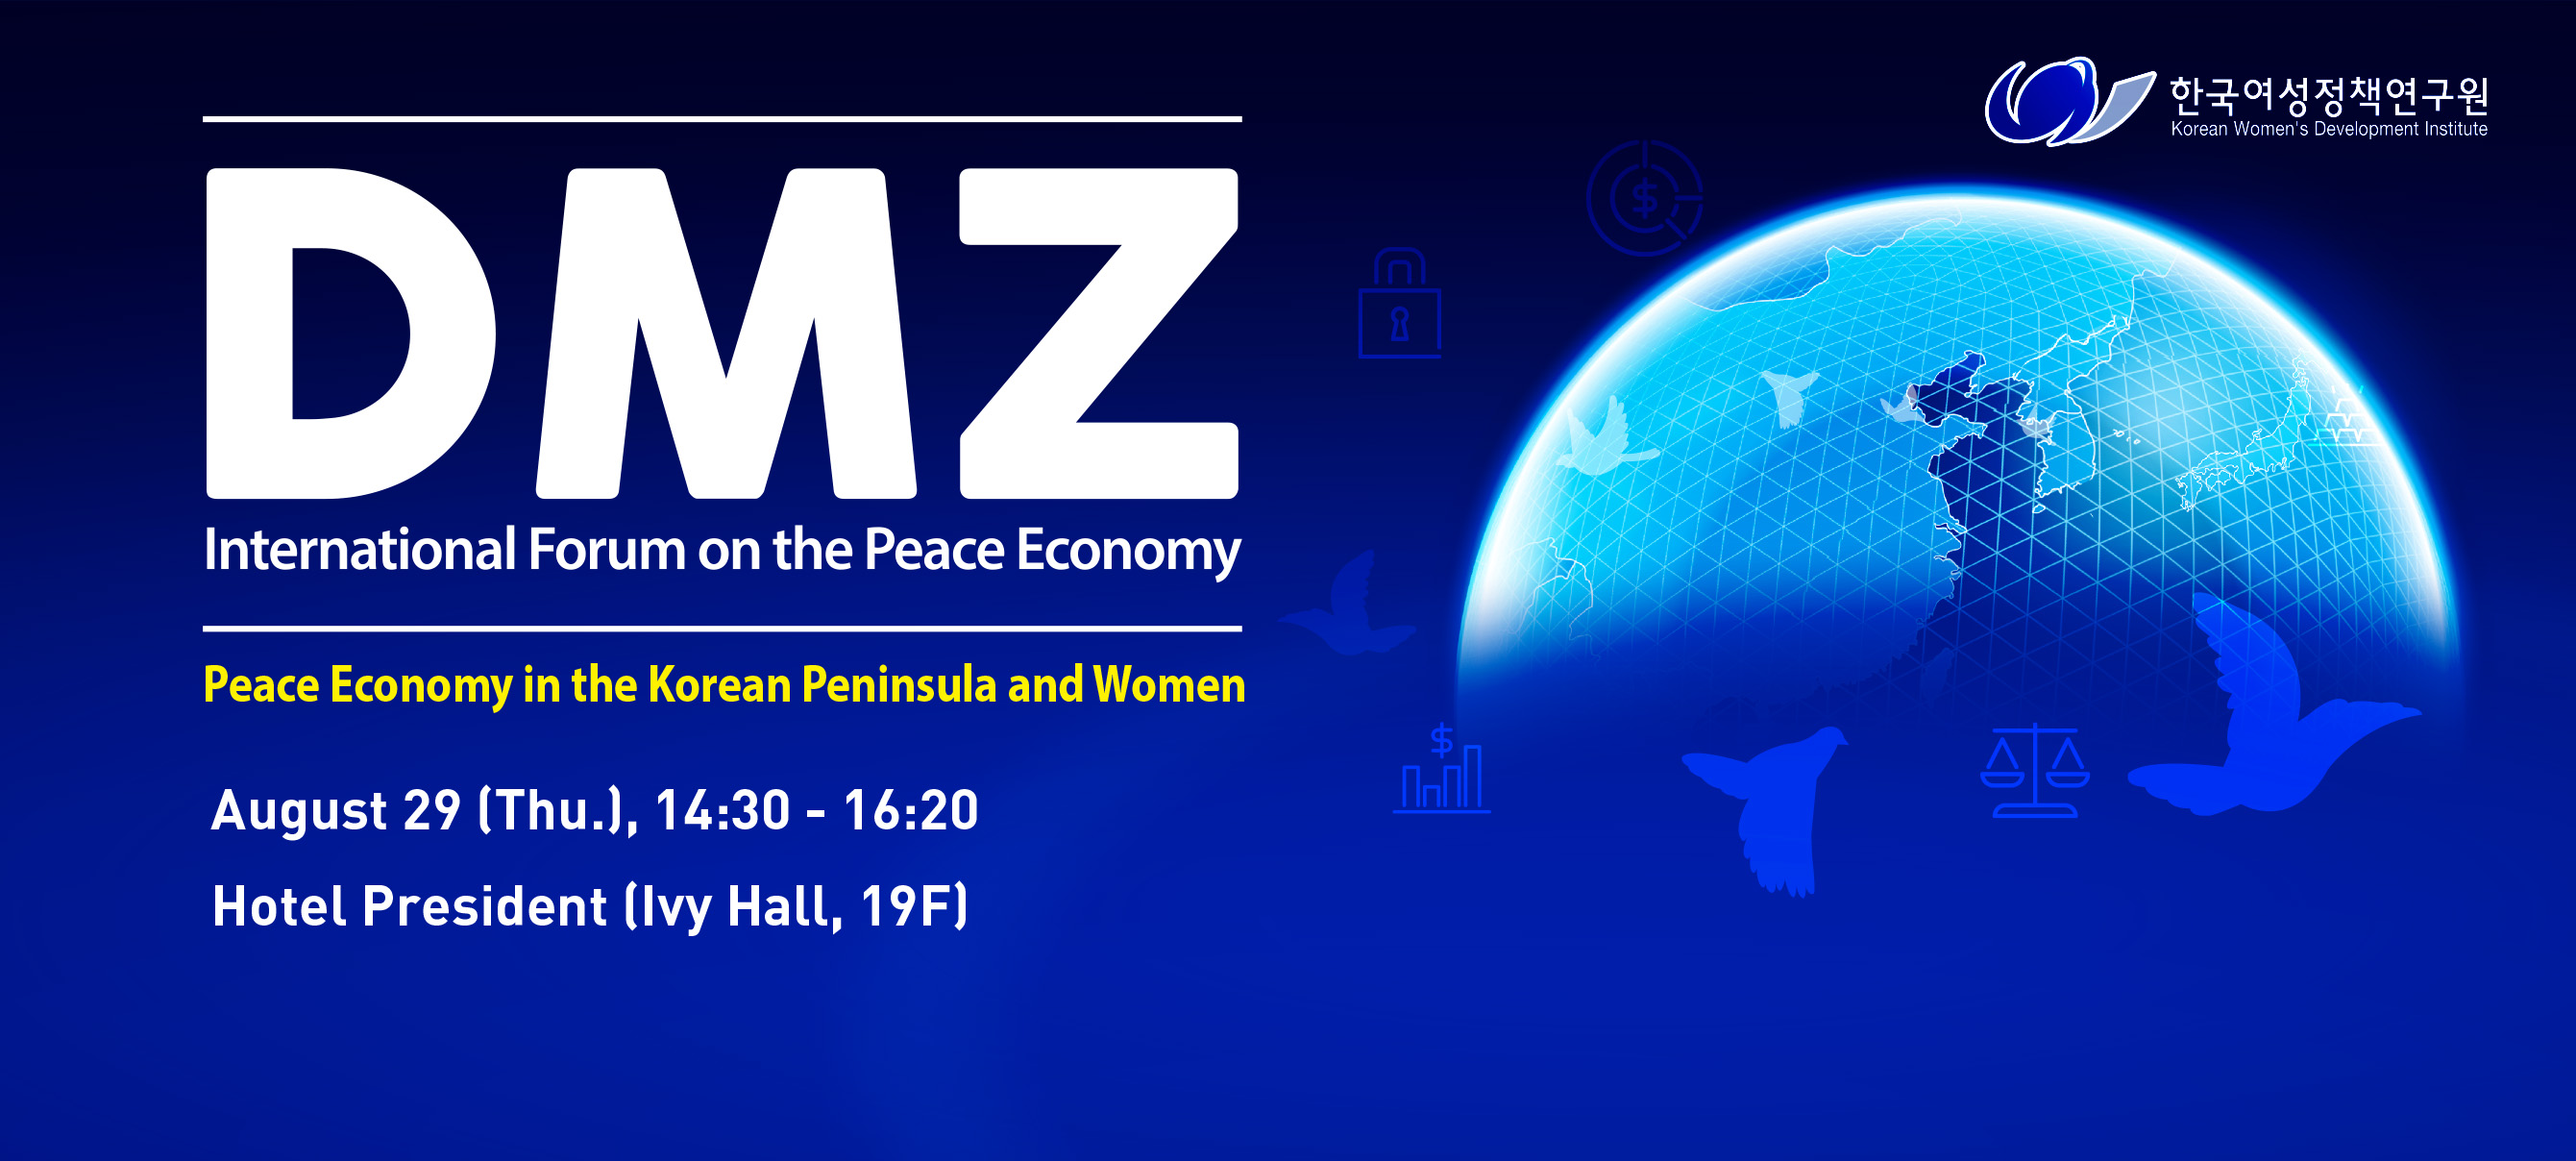 DMZ International Forum on the Peace Economy: Peace Economy in the Korean Peninsula and Women